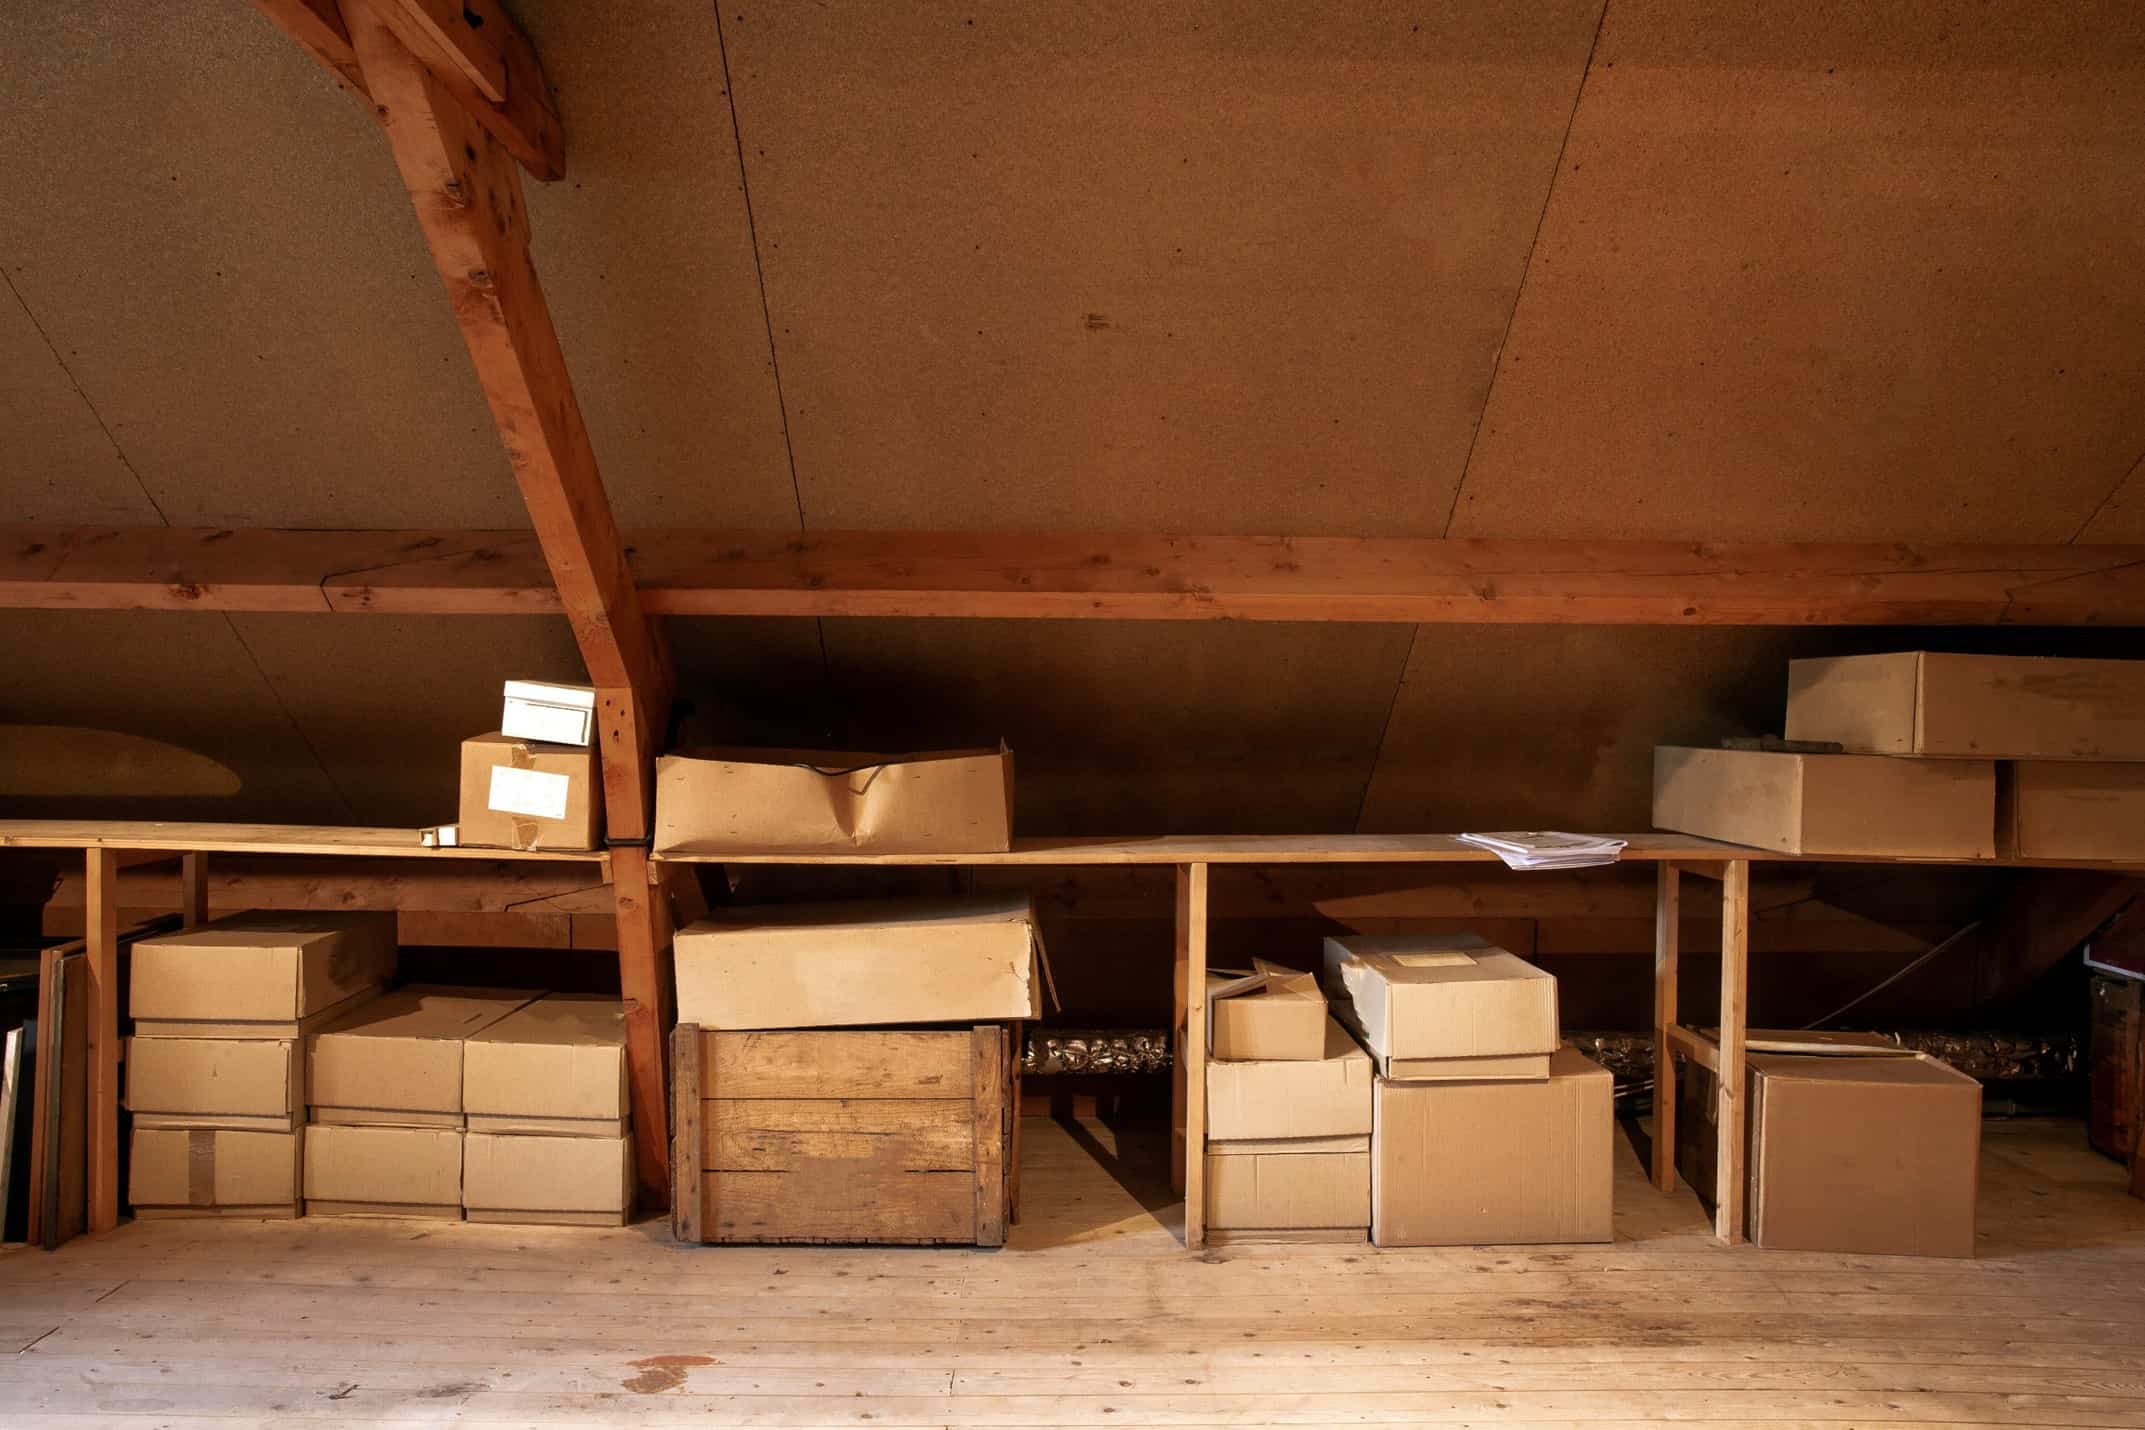 Boxes in the attic